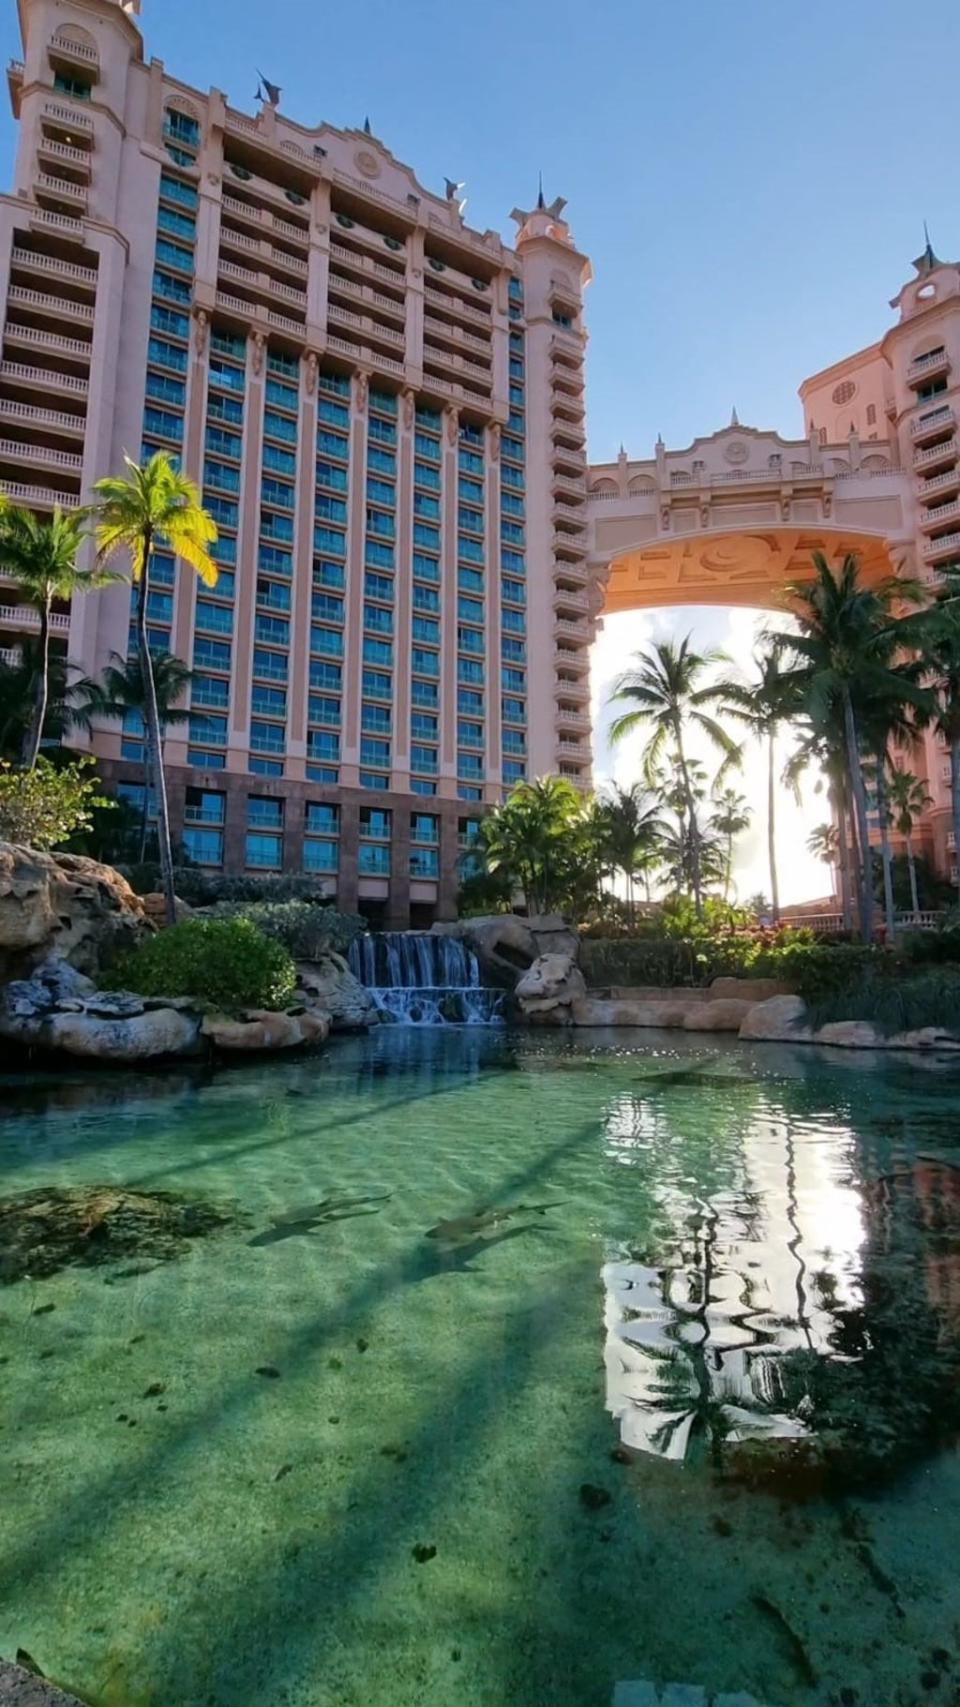  (The Atlantis Hotel on Paradise Island)